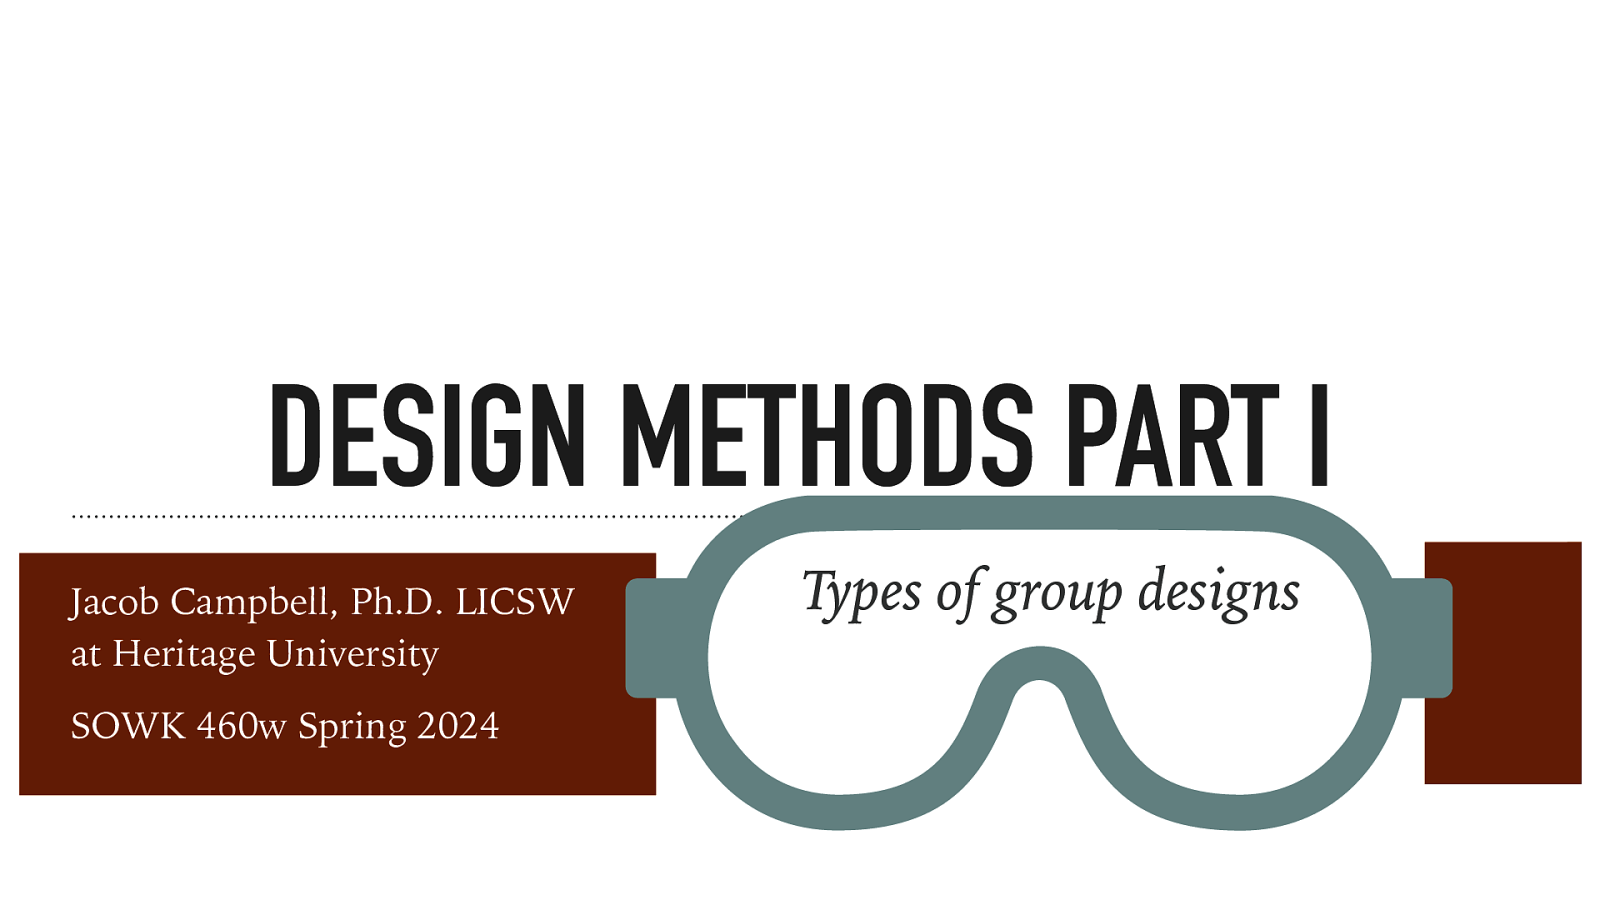 Spring 2024 SOWK 460w Week 08: Design Methods Part I